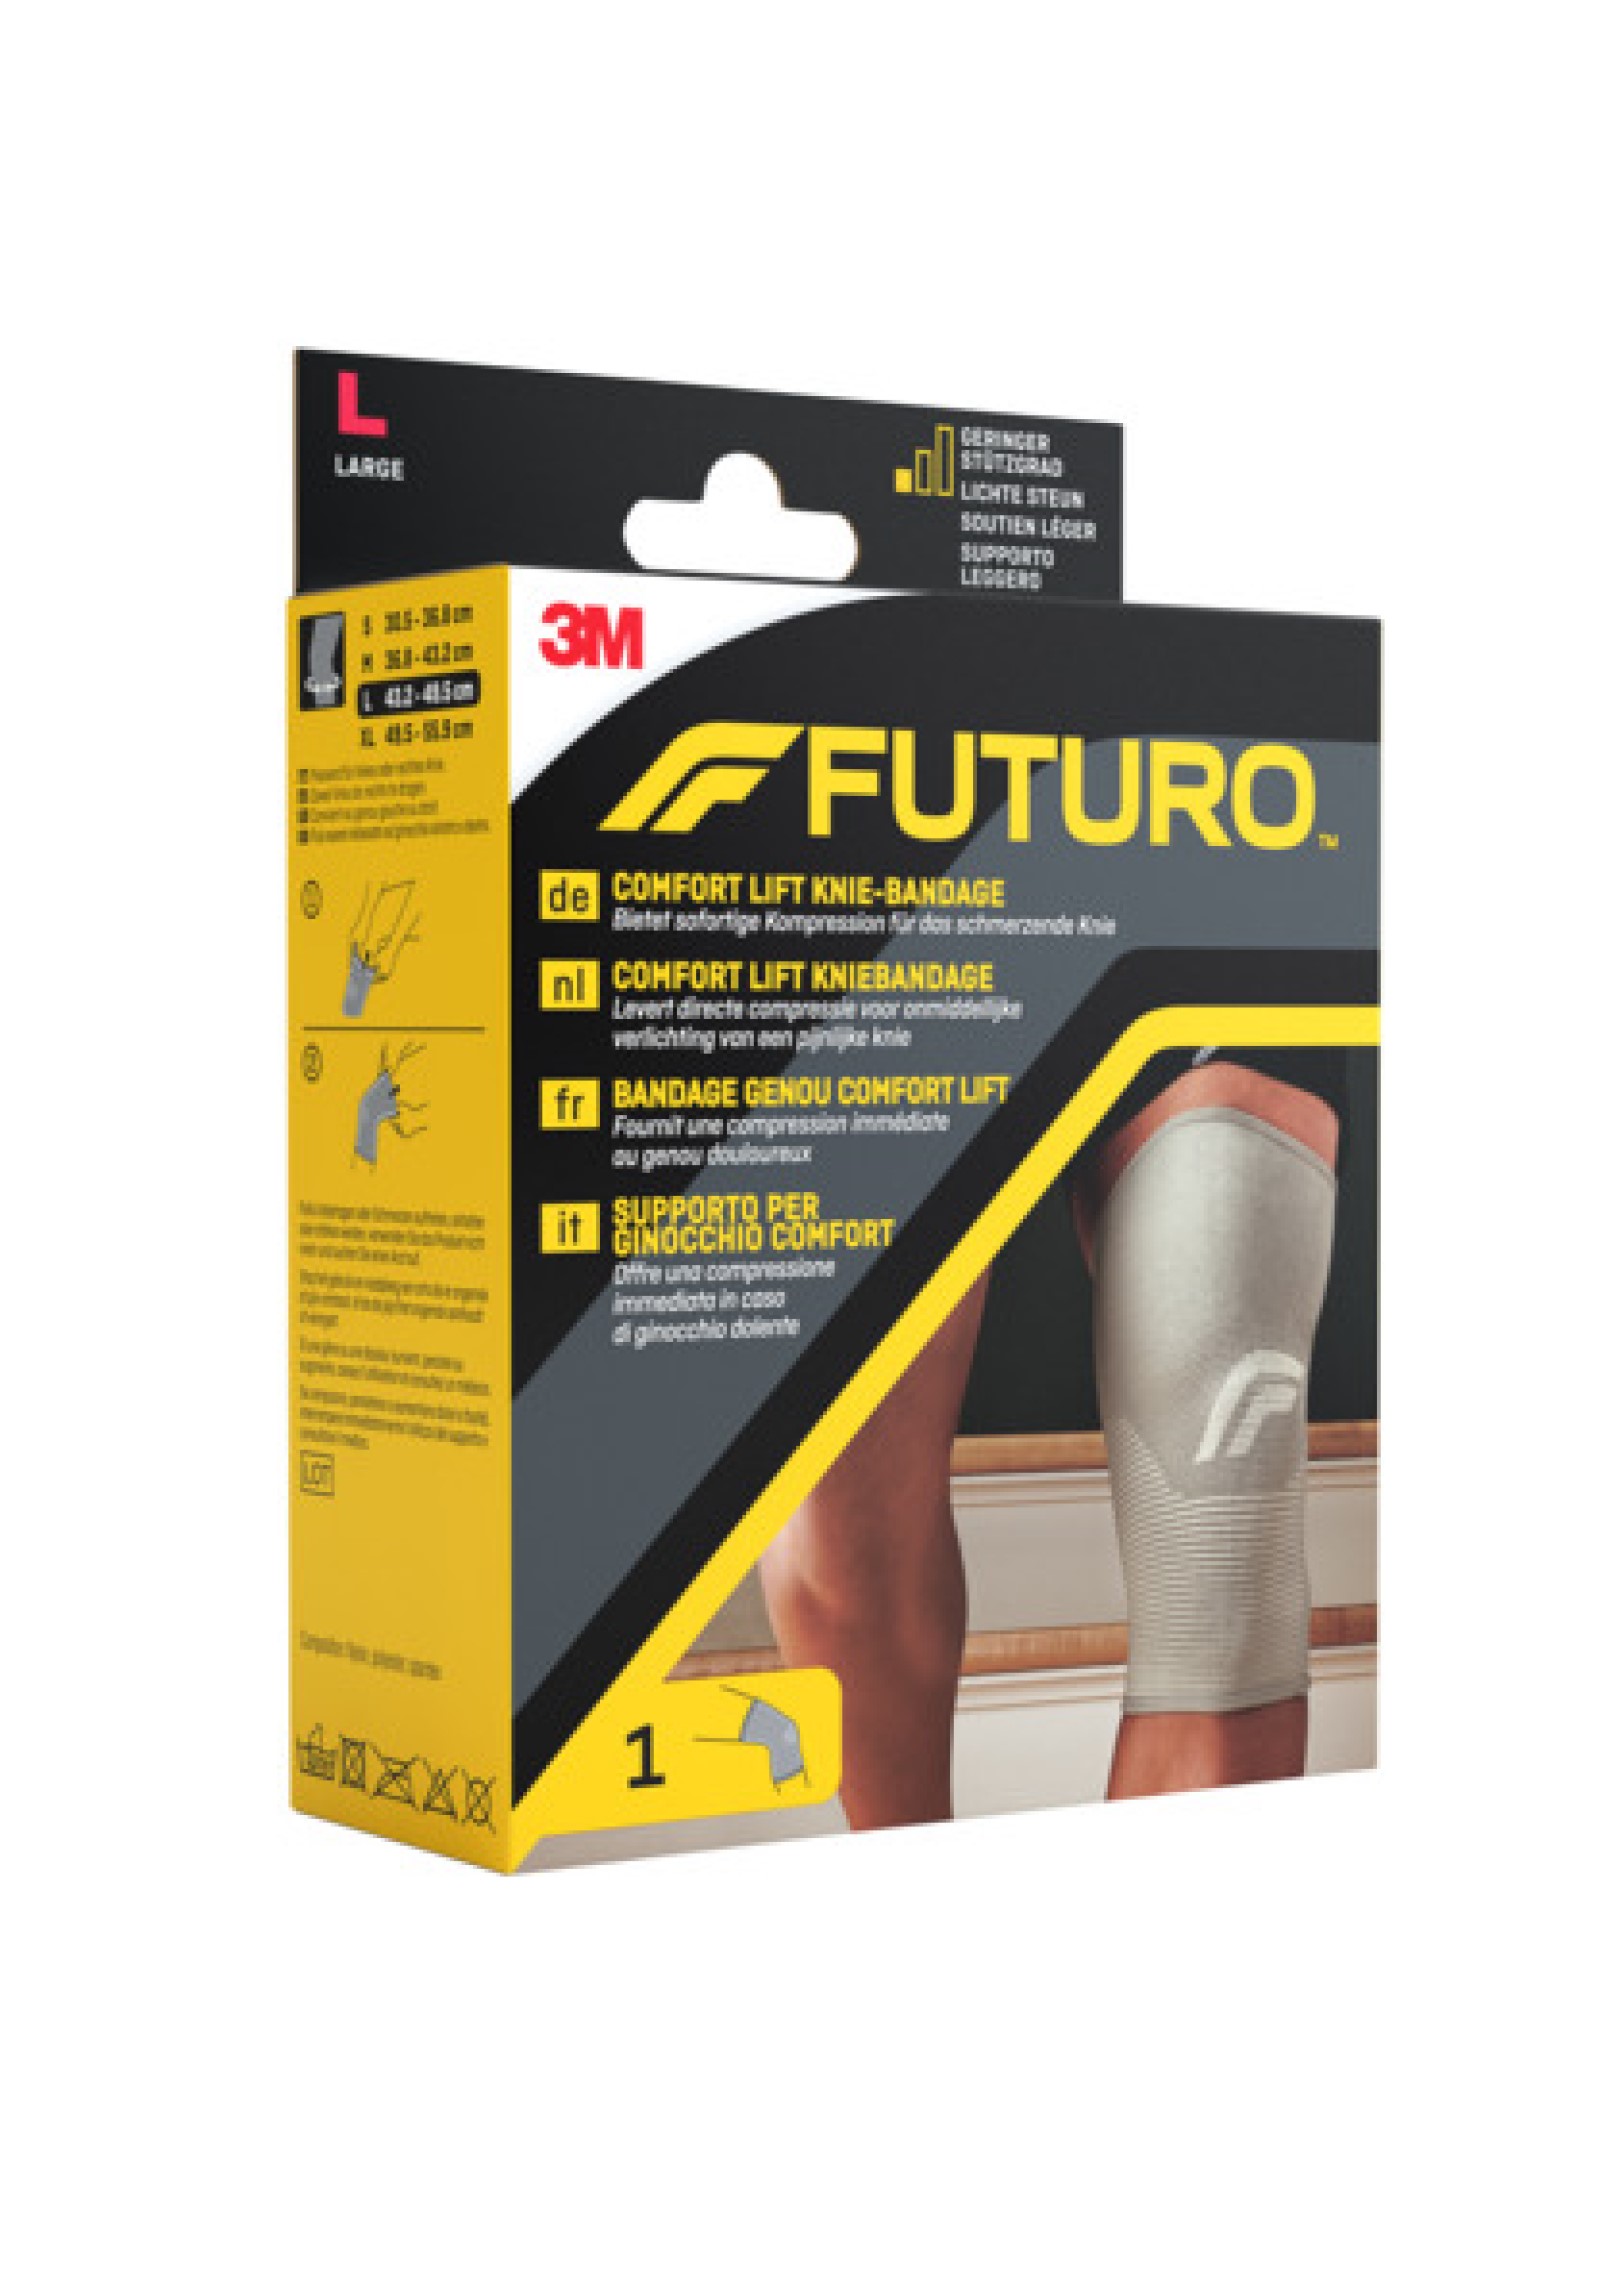 FUTURO™ Comfort Lift Knie-Bandage 76588, L (43.2 - 49.5 cm)